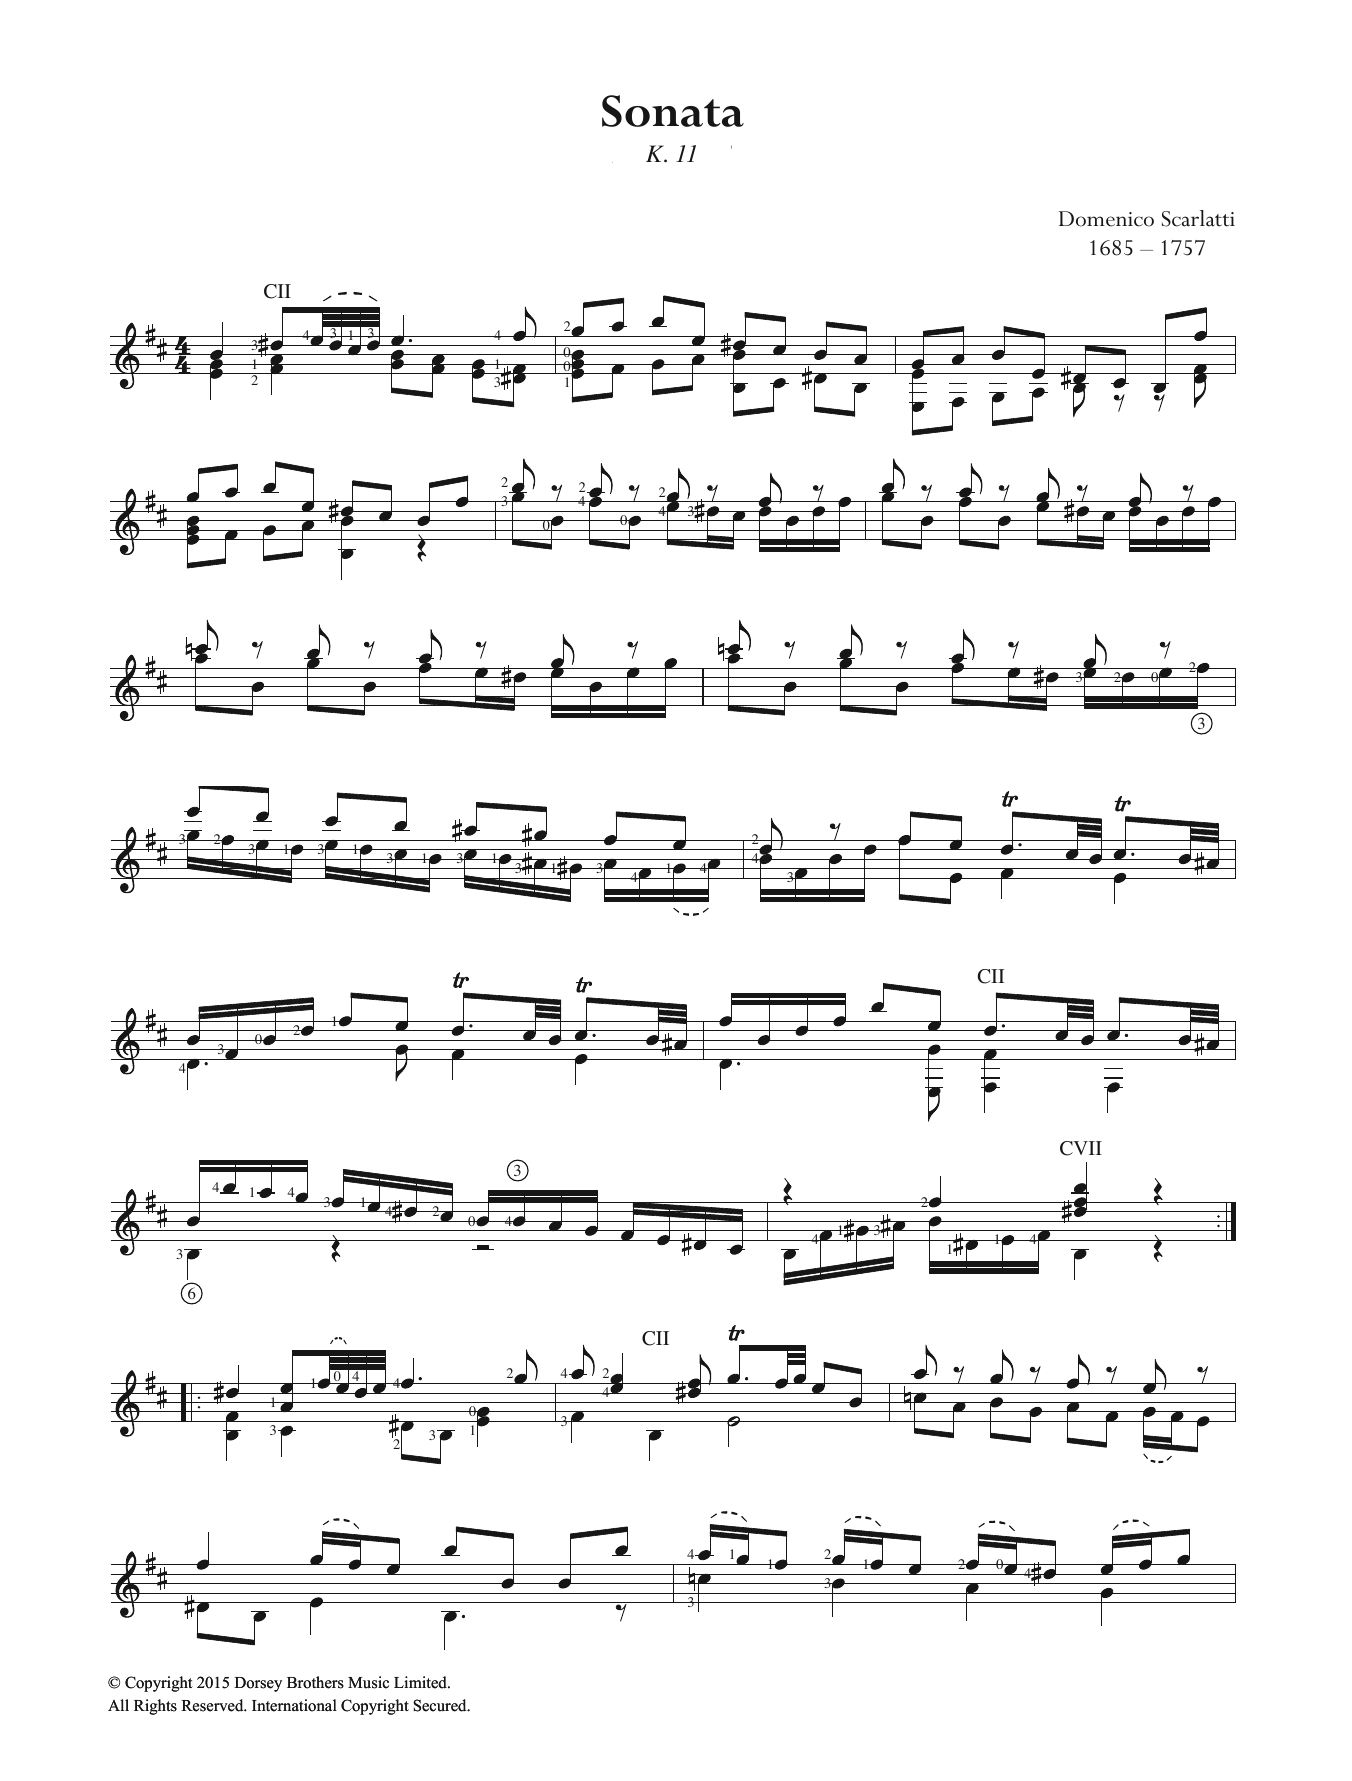 Domenico Scarlatti Sonata K.11 Sheet Music Notes & Chords for Guitar - Download or Print PDF